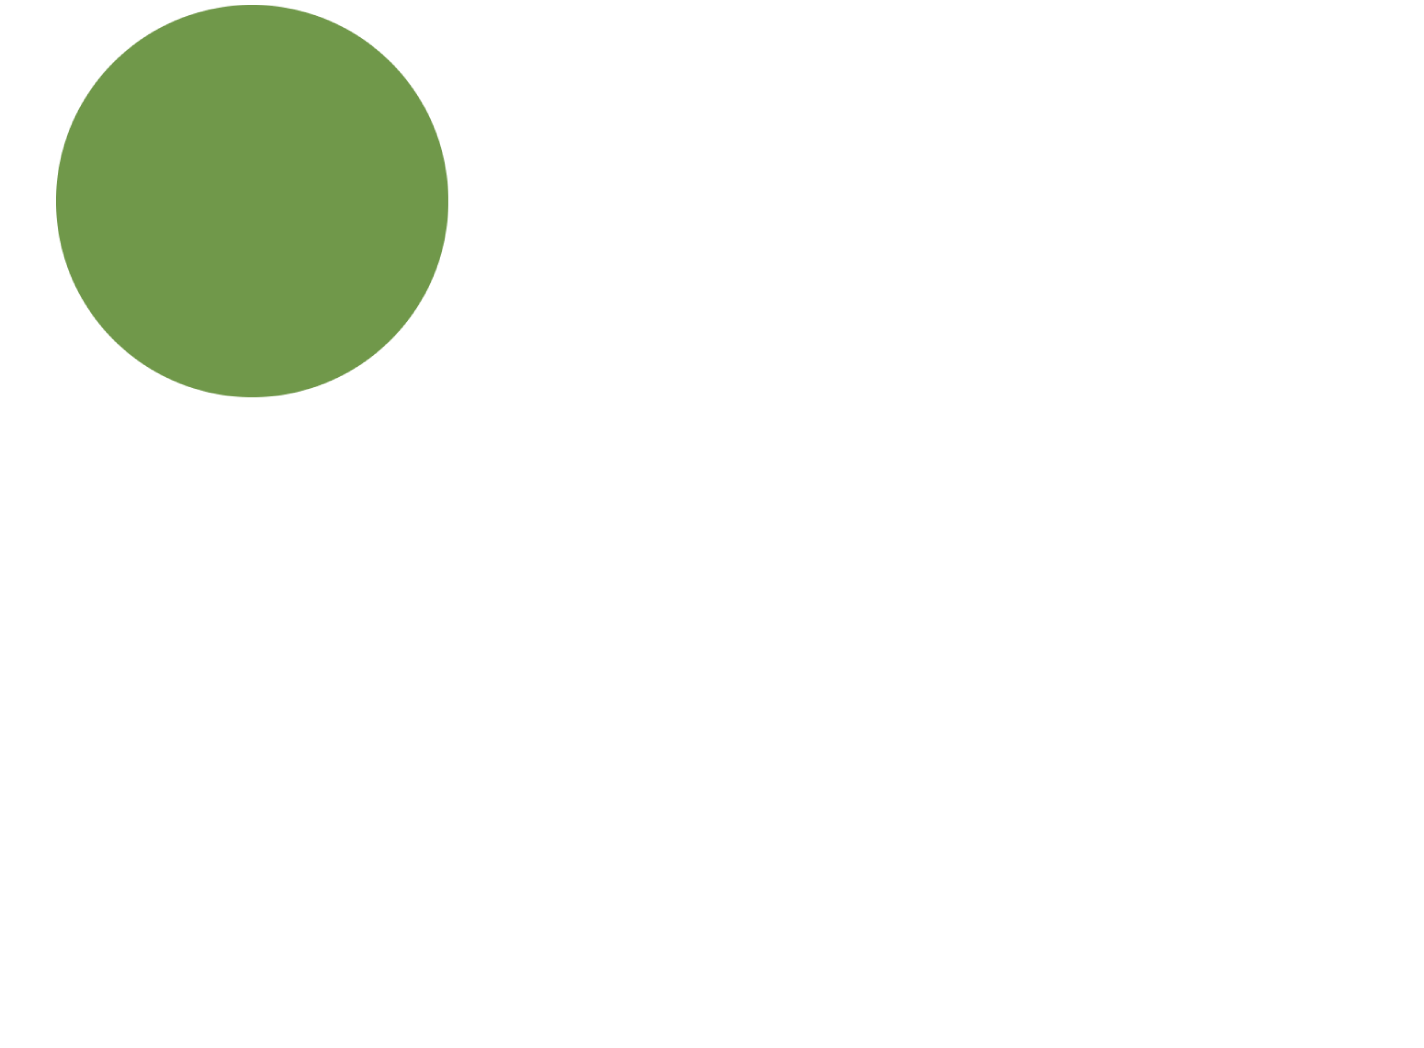 Green Circle Graphic